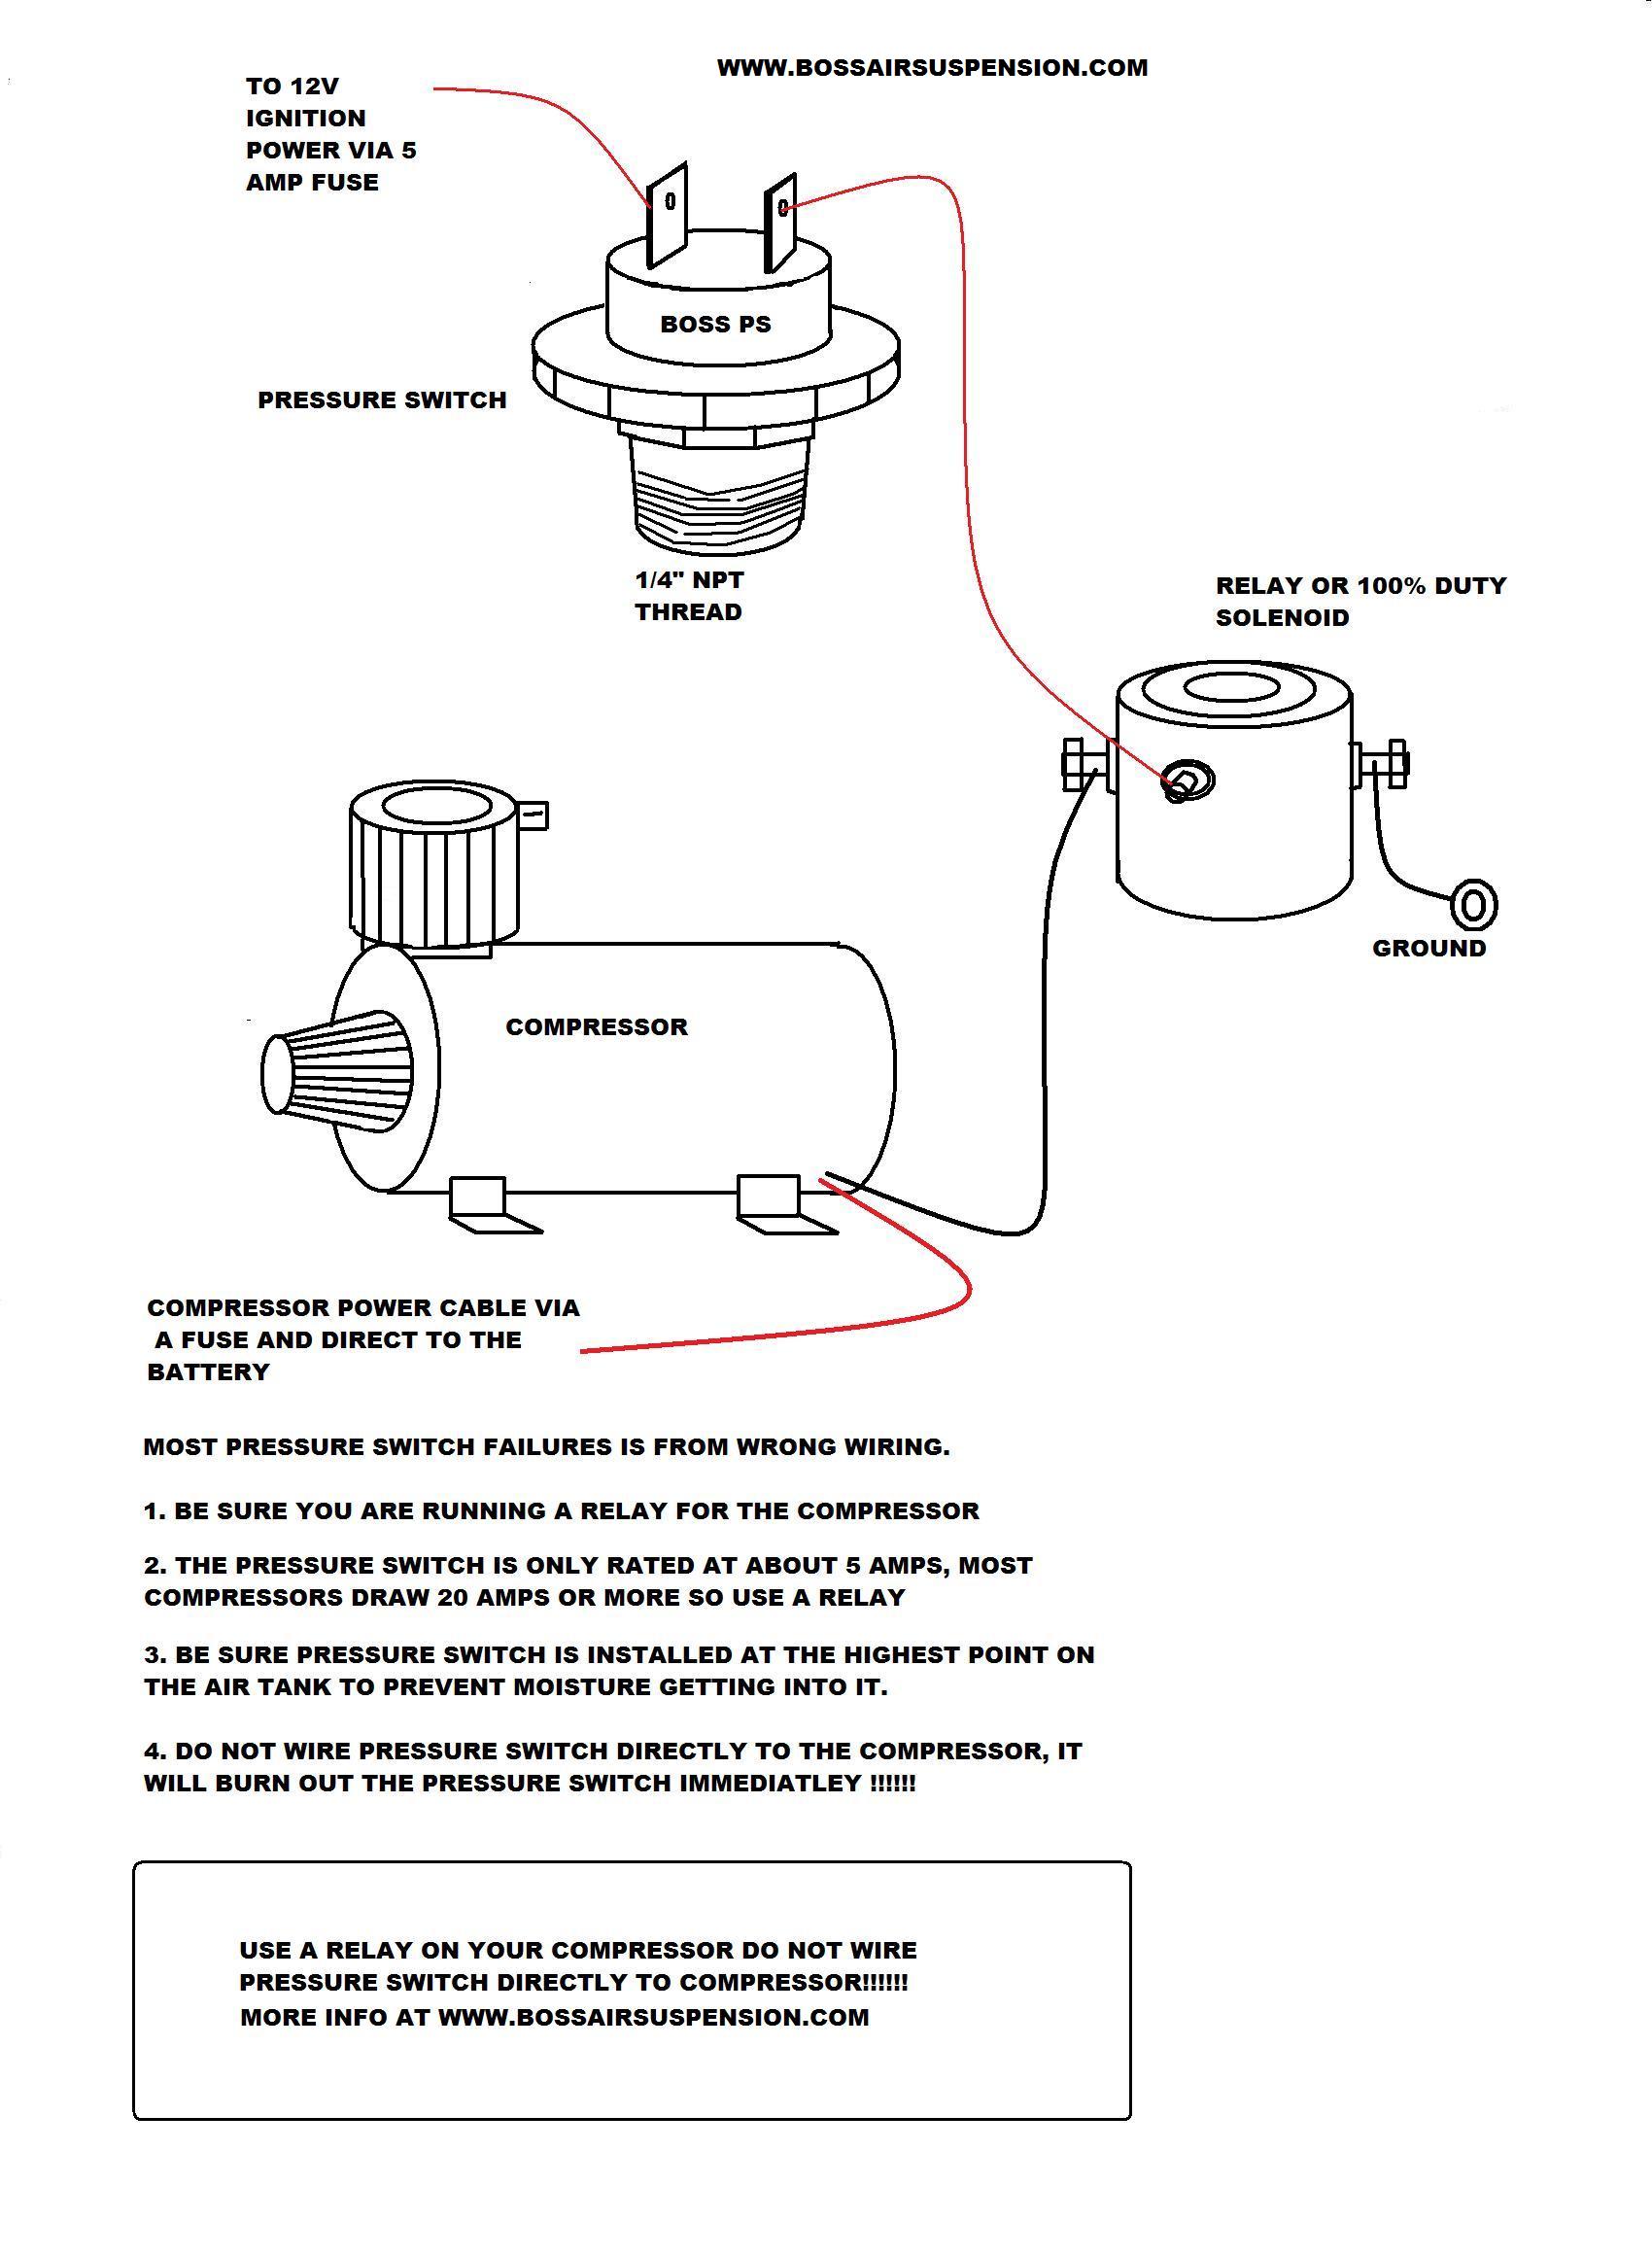 Diagram Wiring Diagram Airpressor Pressure Switch Full